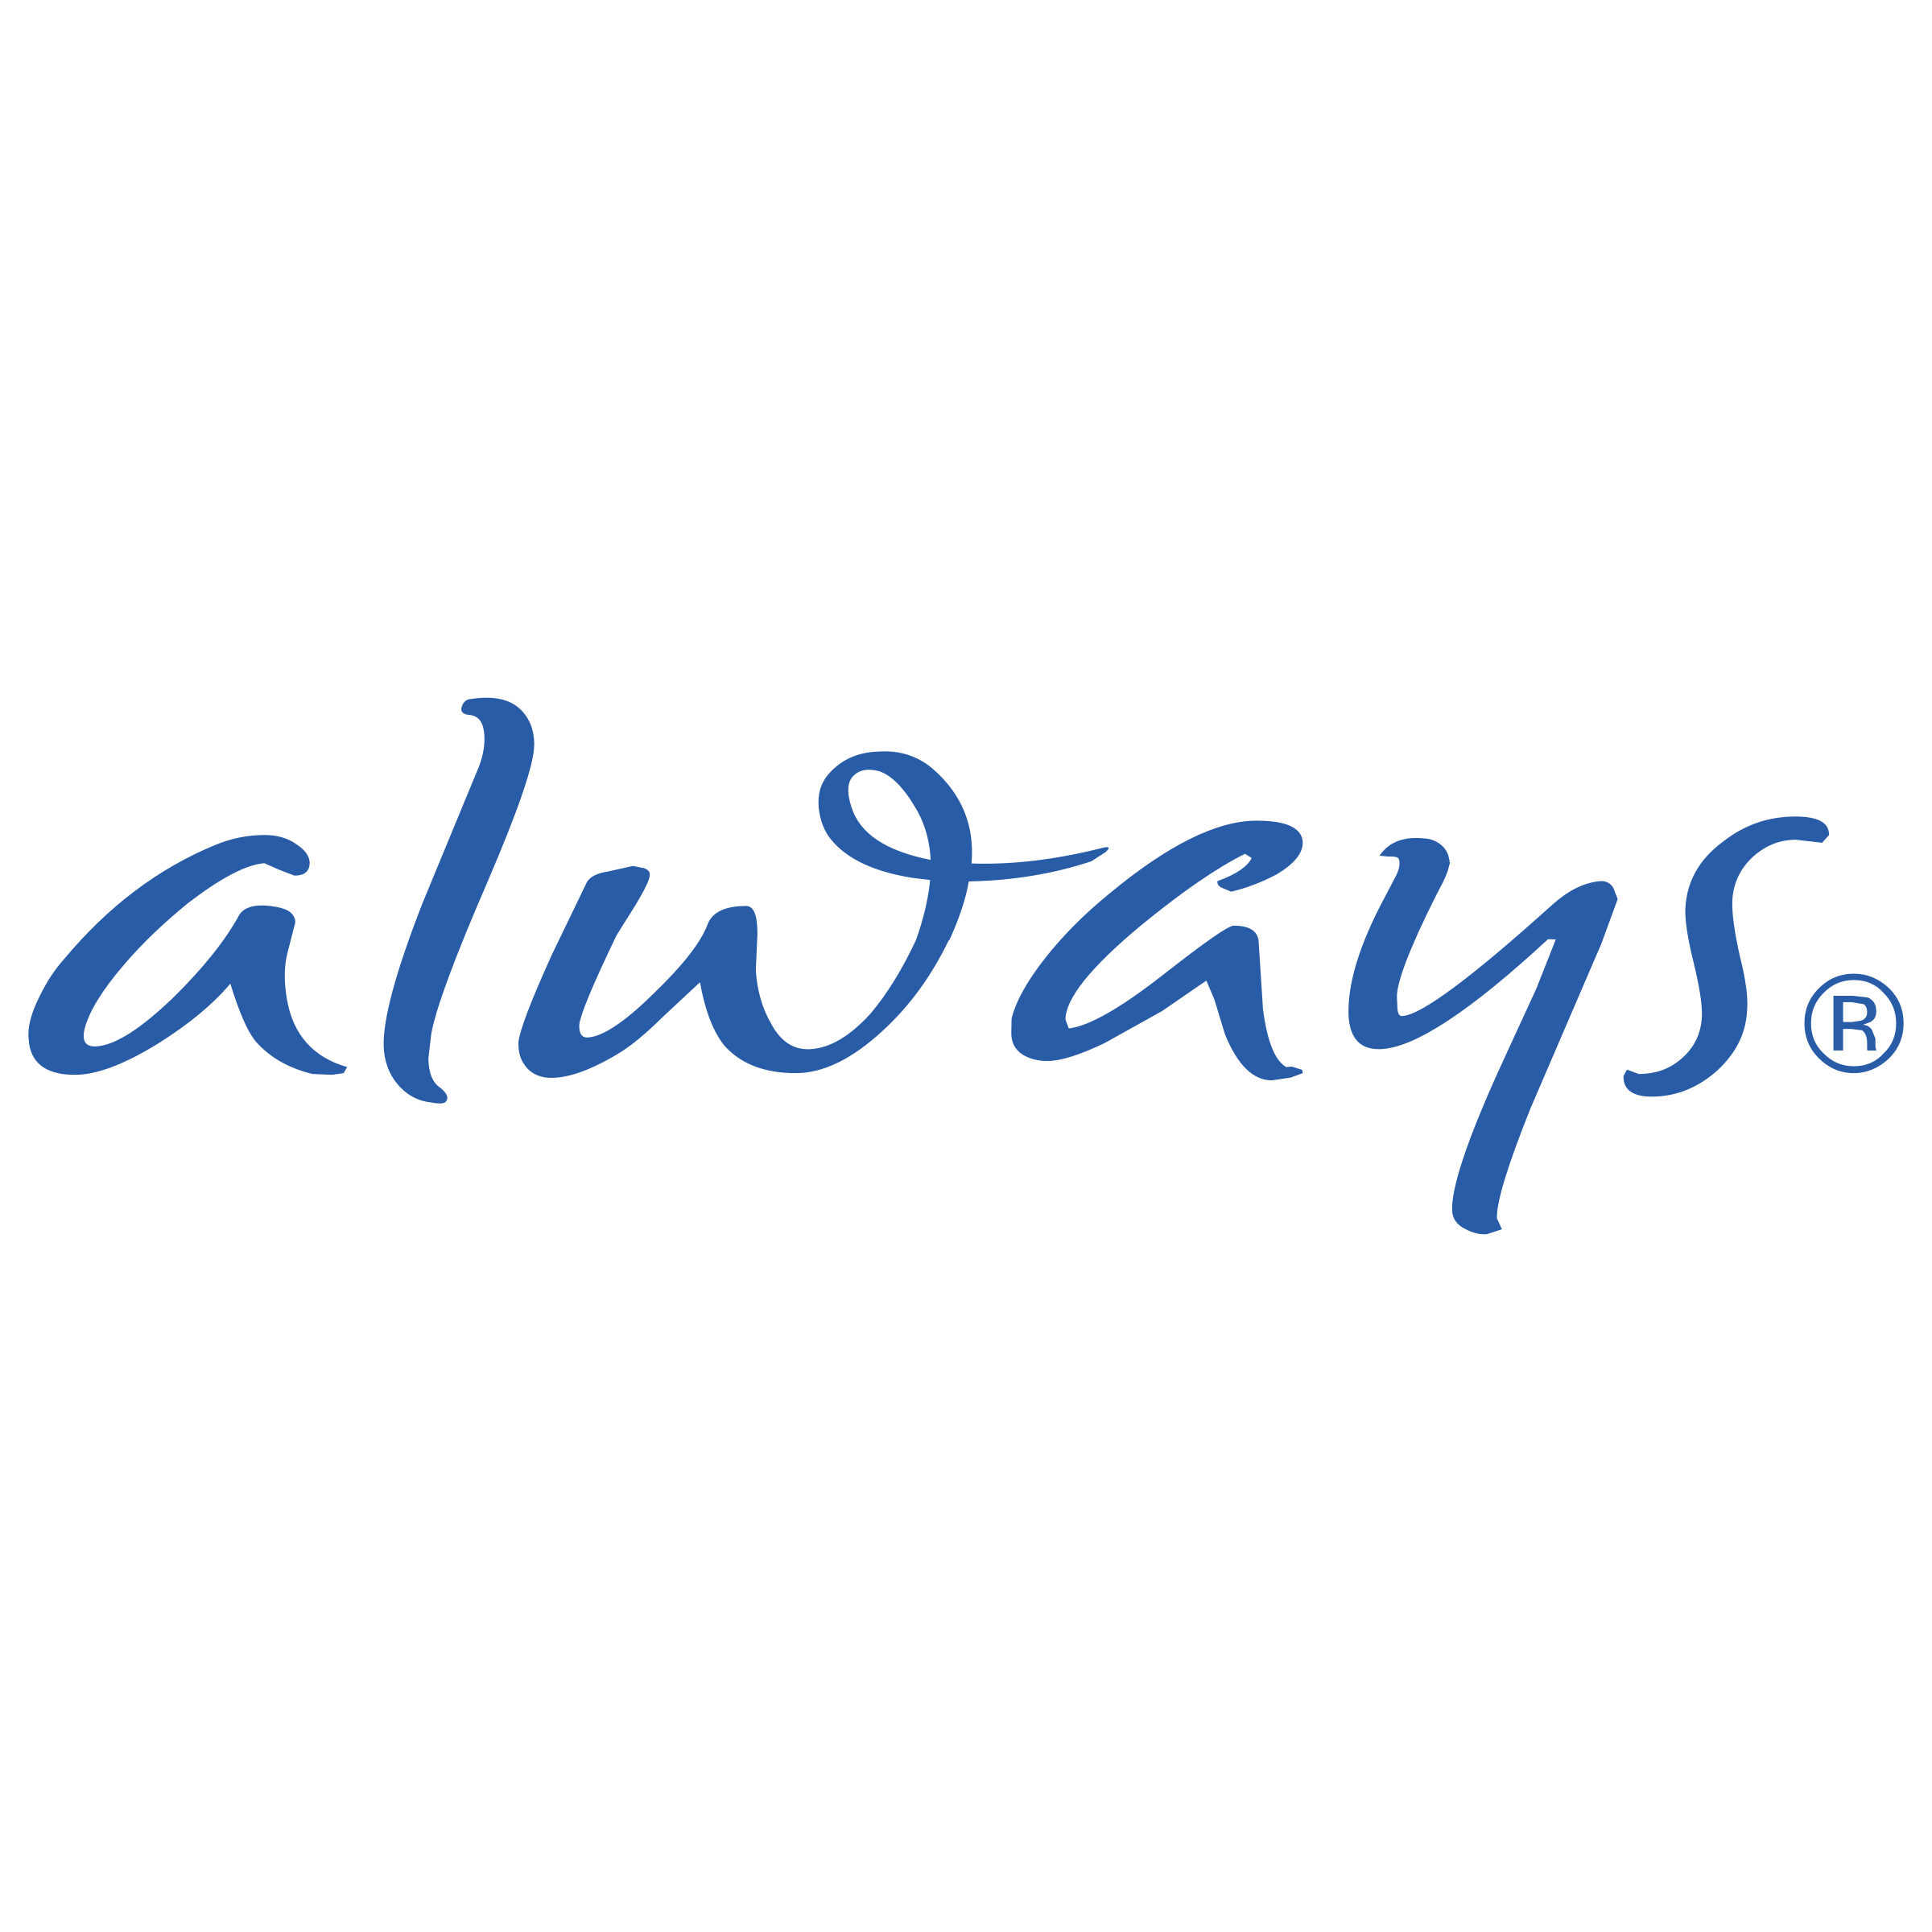 Always Logo - Always Logo PNG Transparent & SVG Vector - Freebie Supply